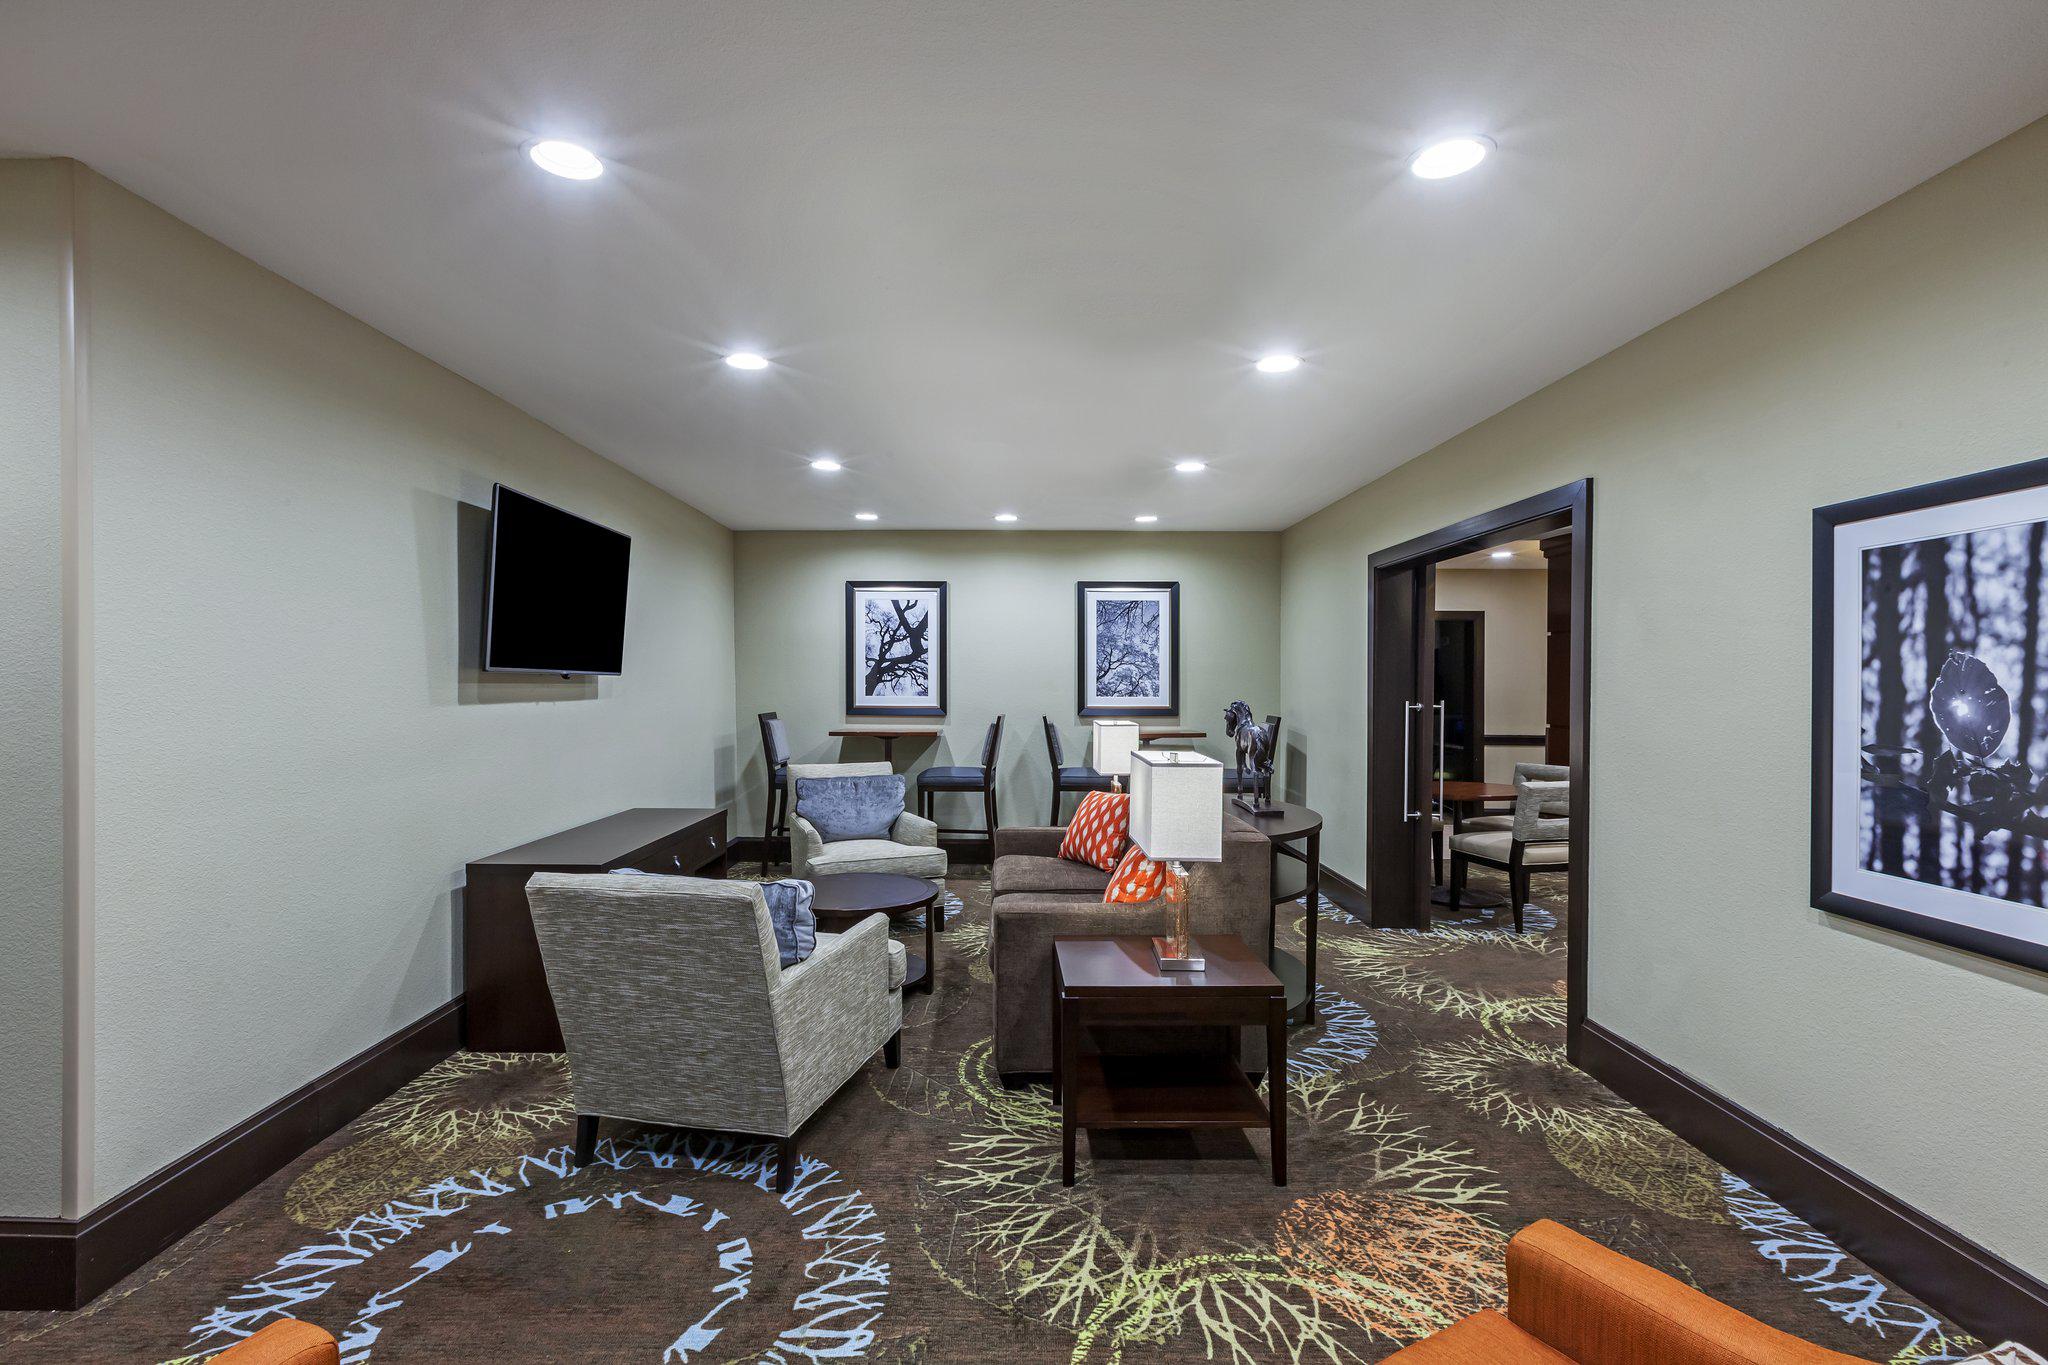 Staybridge Suites Fort Worth - Fossil Creek, an IHG Hotel Fort Worth (817)847-5000